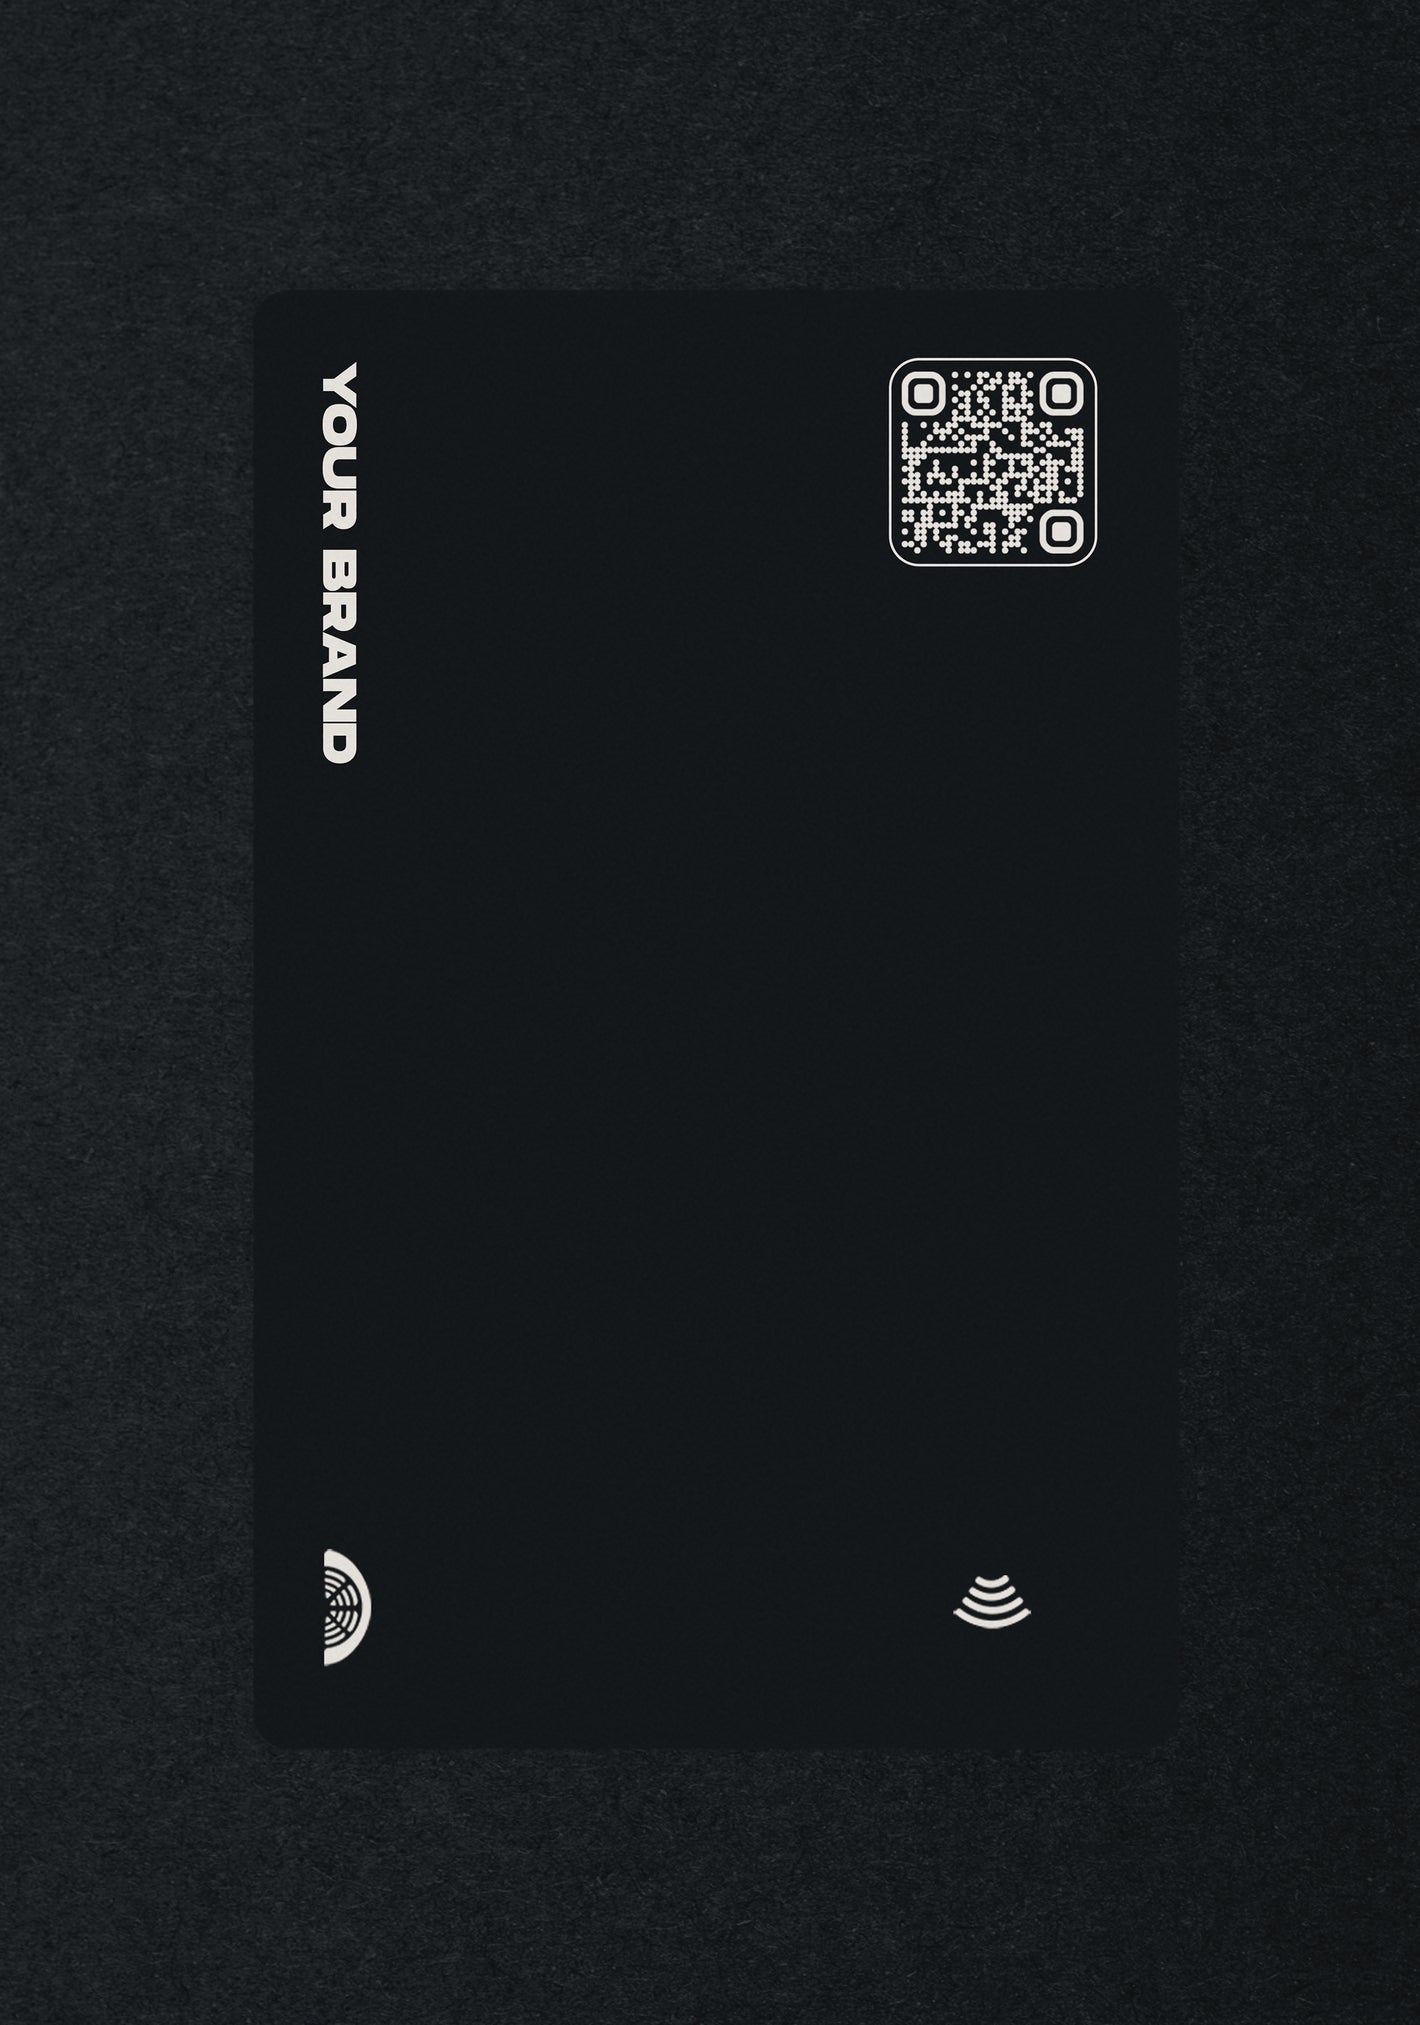 Bestselling black NFC business card